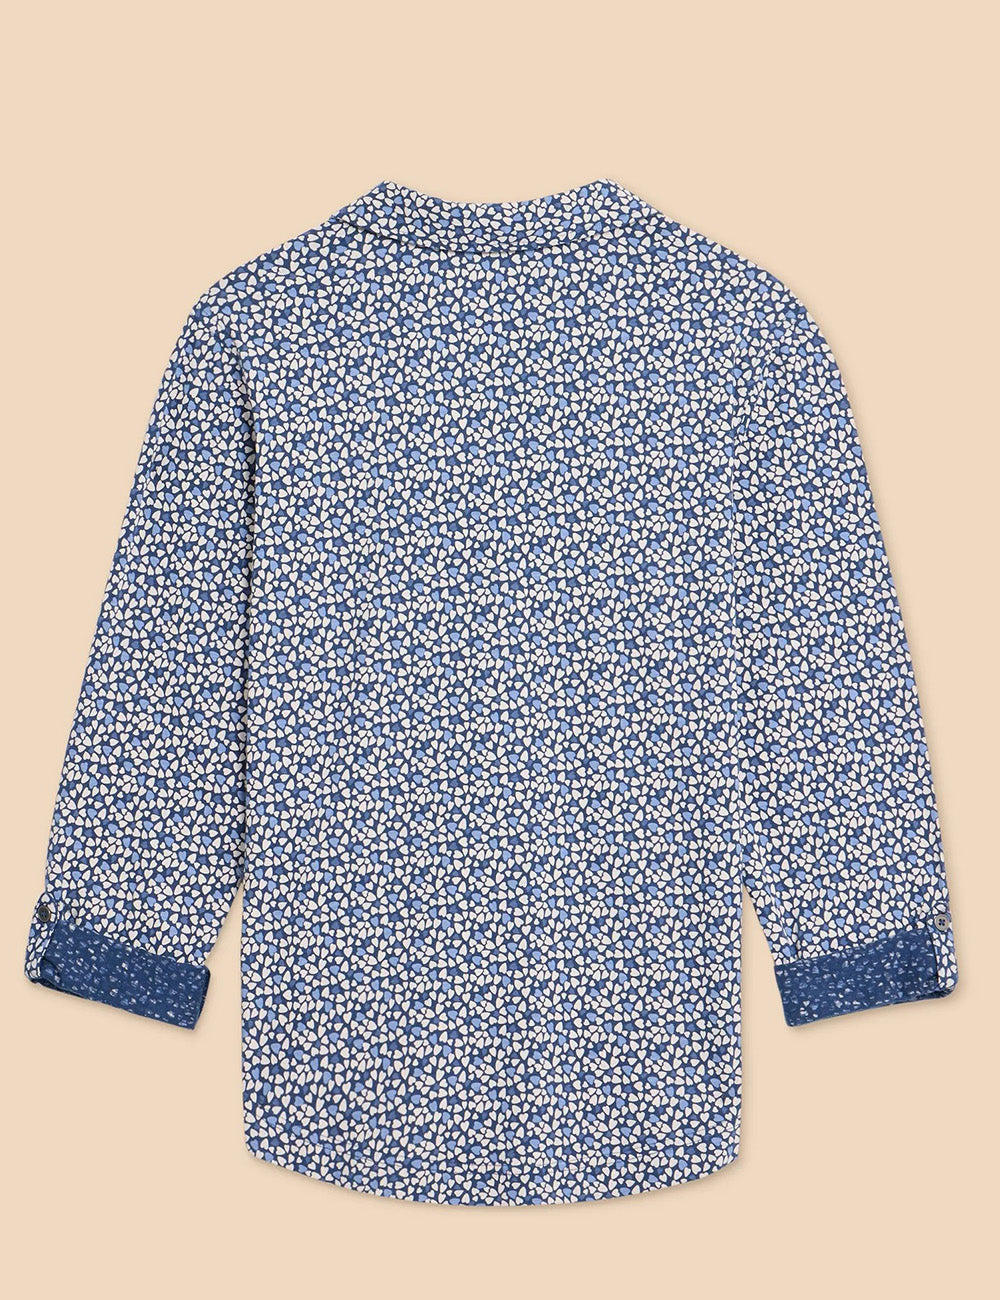 White Stuff Annie Jersey Shirt - Blue Print